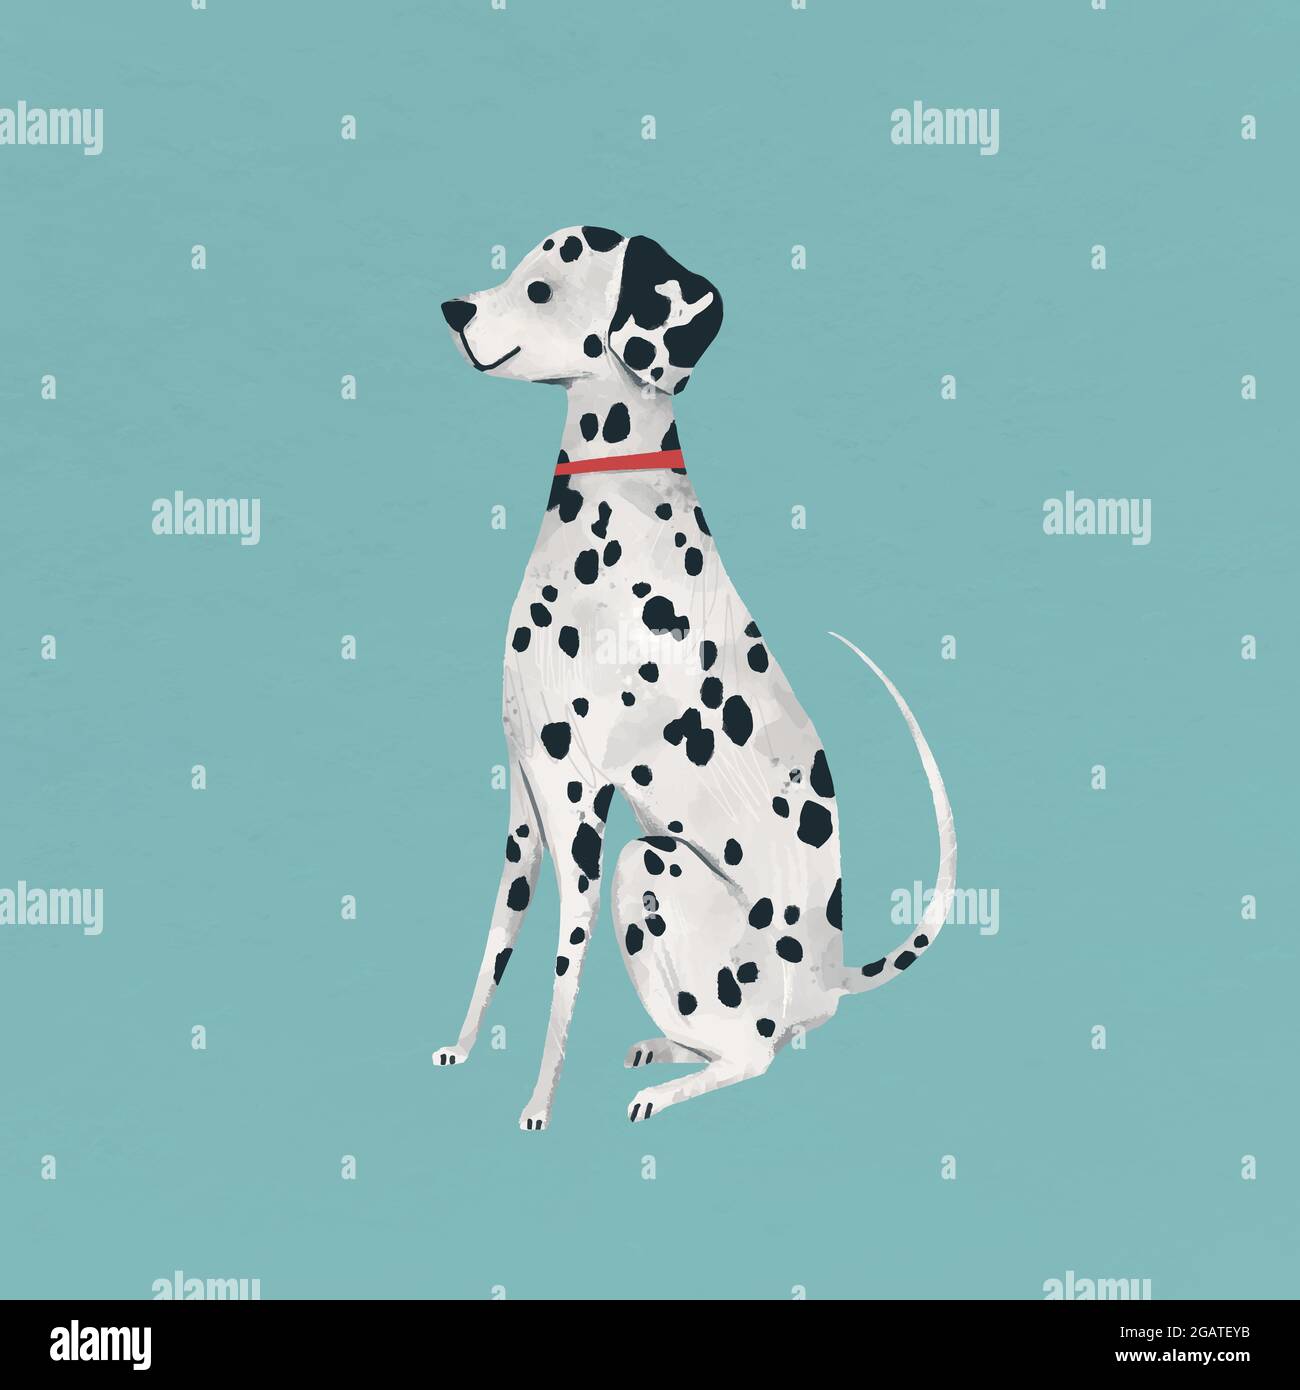 Dalmatian Dalmatiner Dog Stock Vektorgrafiken kaufen   Seite 20   Alamy